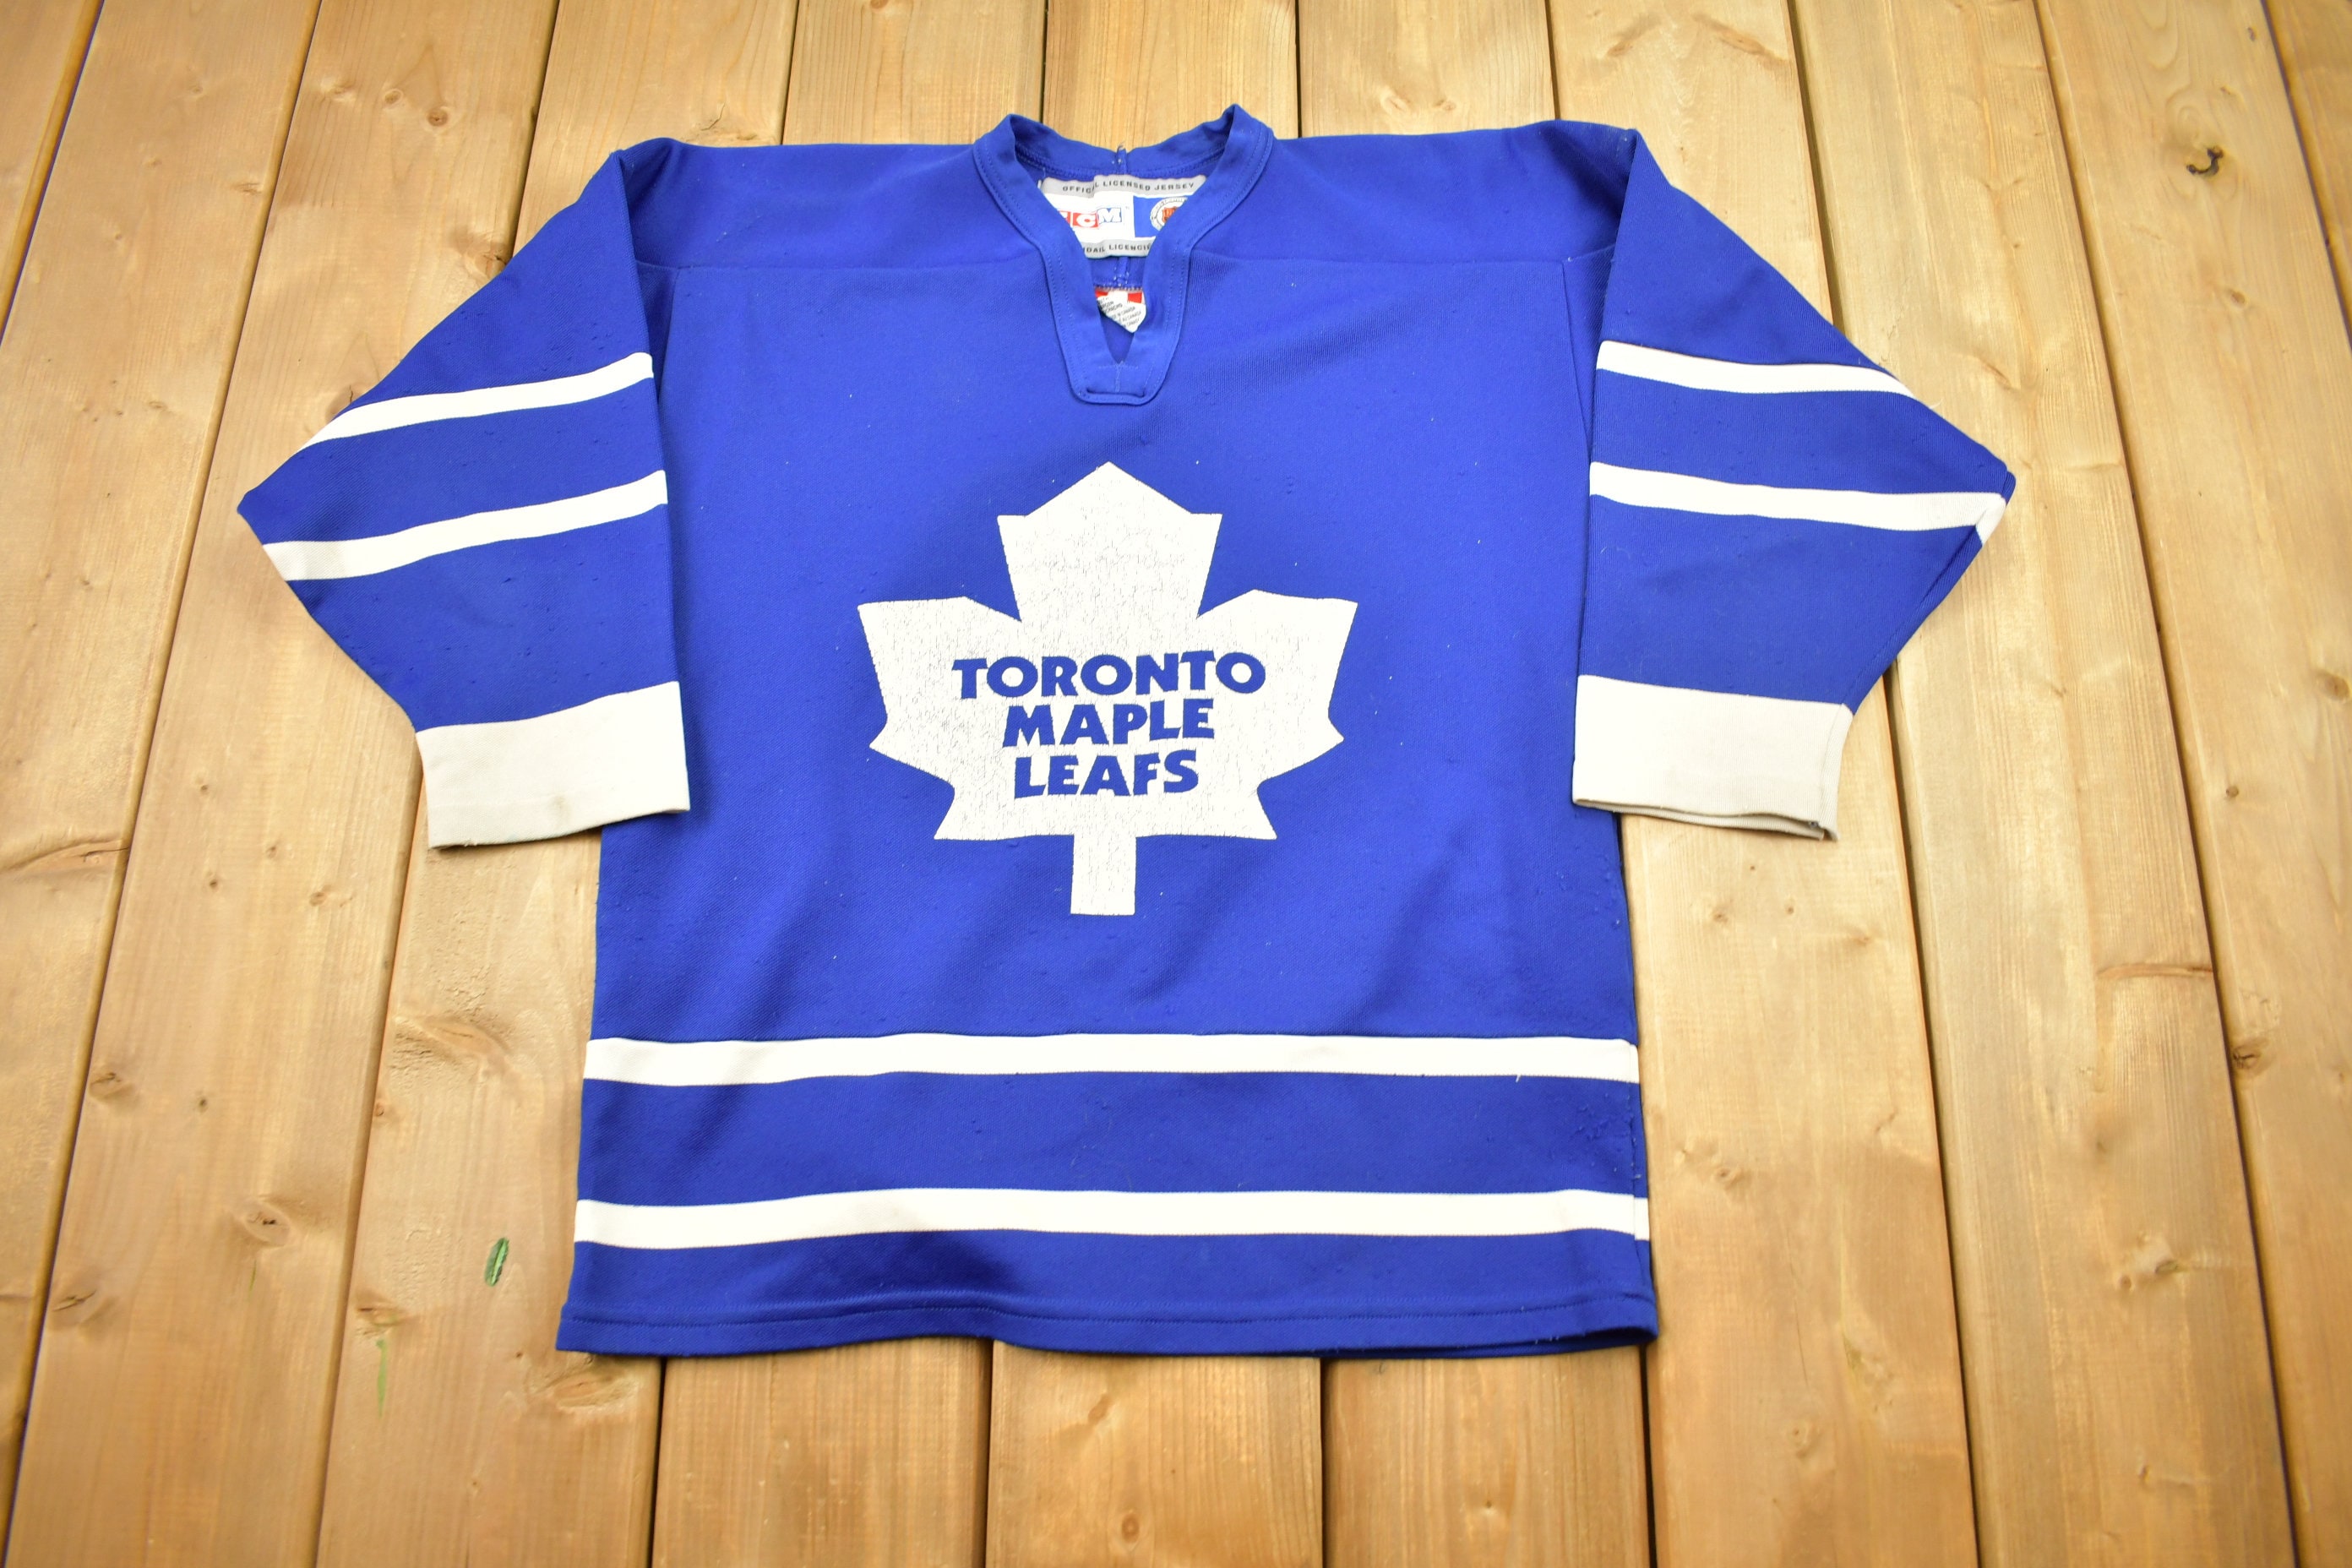 Lostboysvintage True Vintage Toronto Maple Leafs 1970s NHL Youth Sized Shirt / Made in USA / Single Stitch / NHL Hockey / 70s Sports Jersey / Rare Vintage